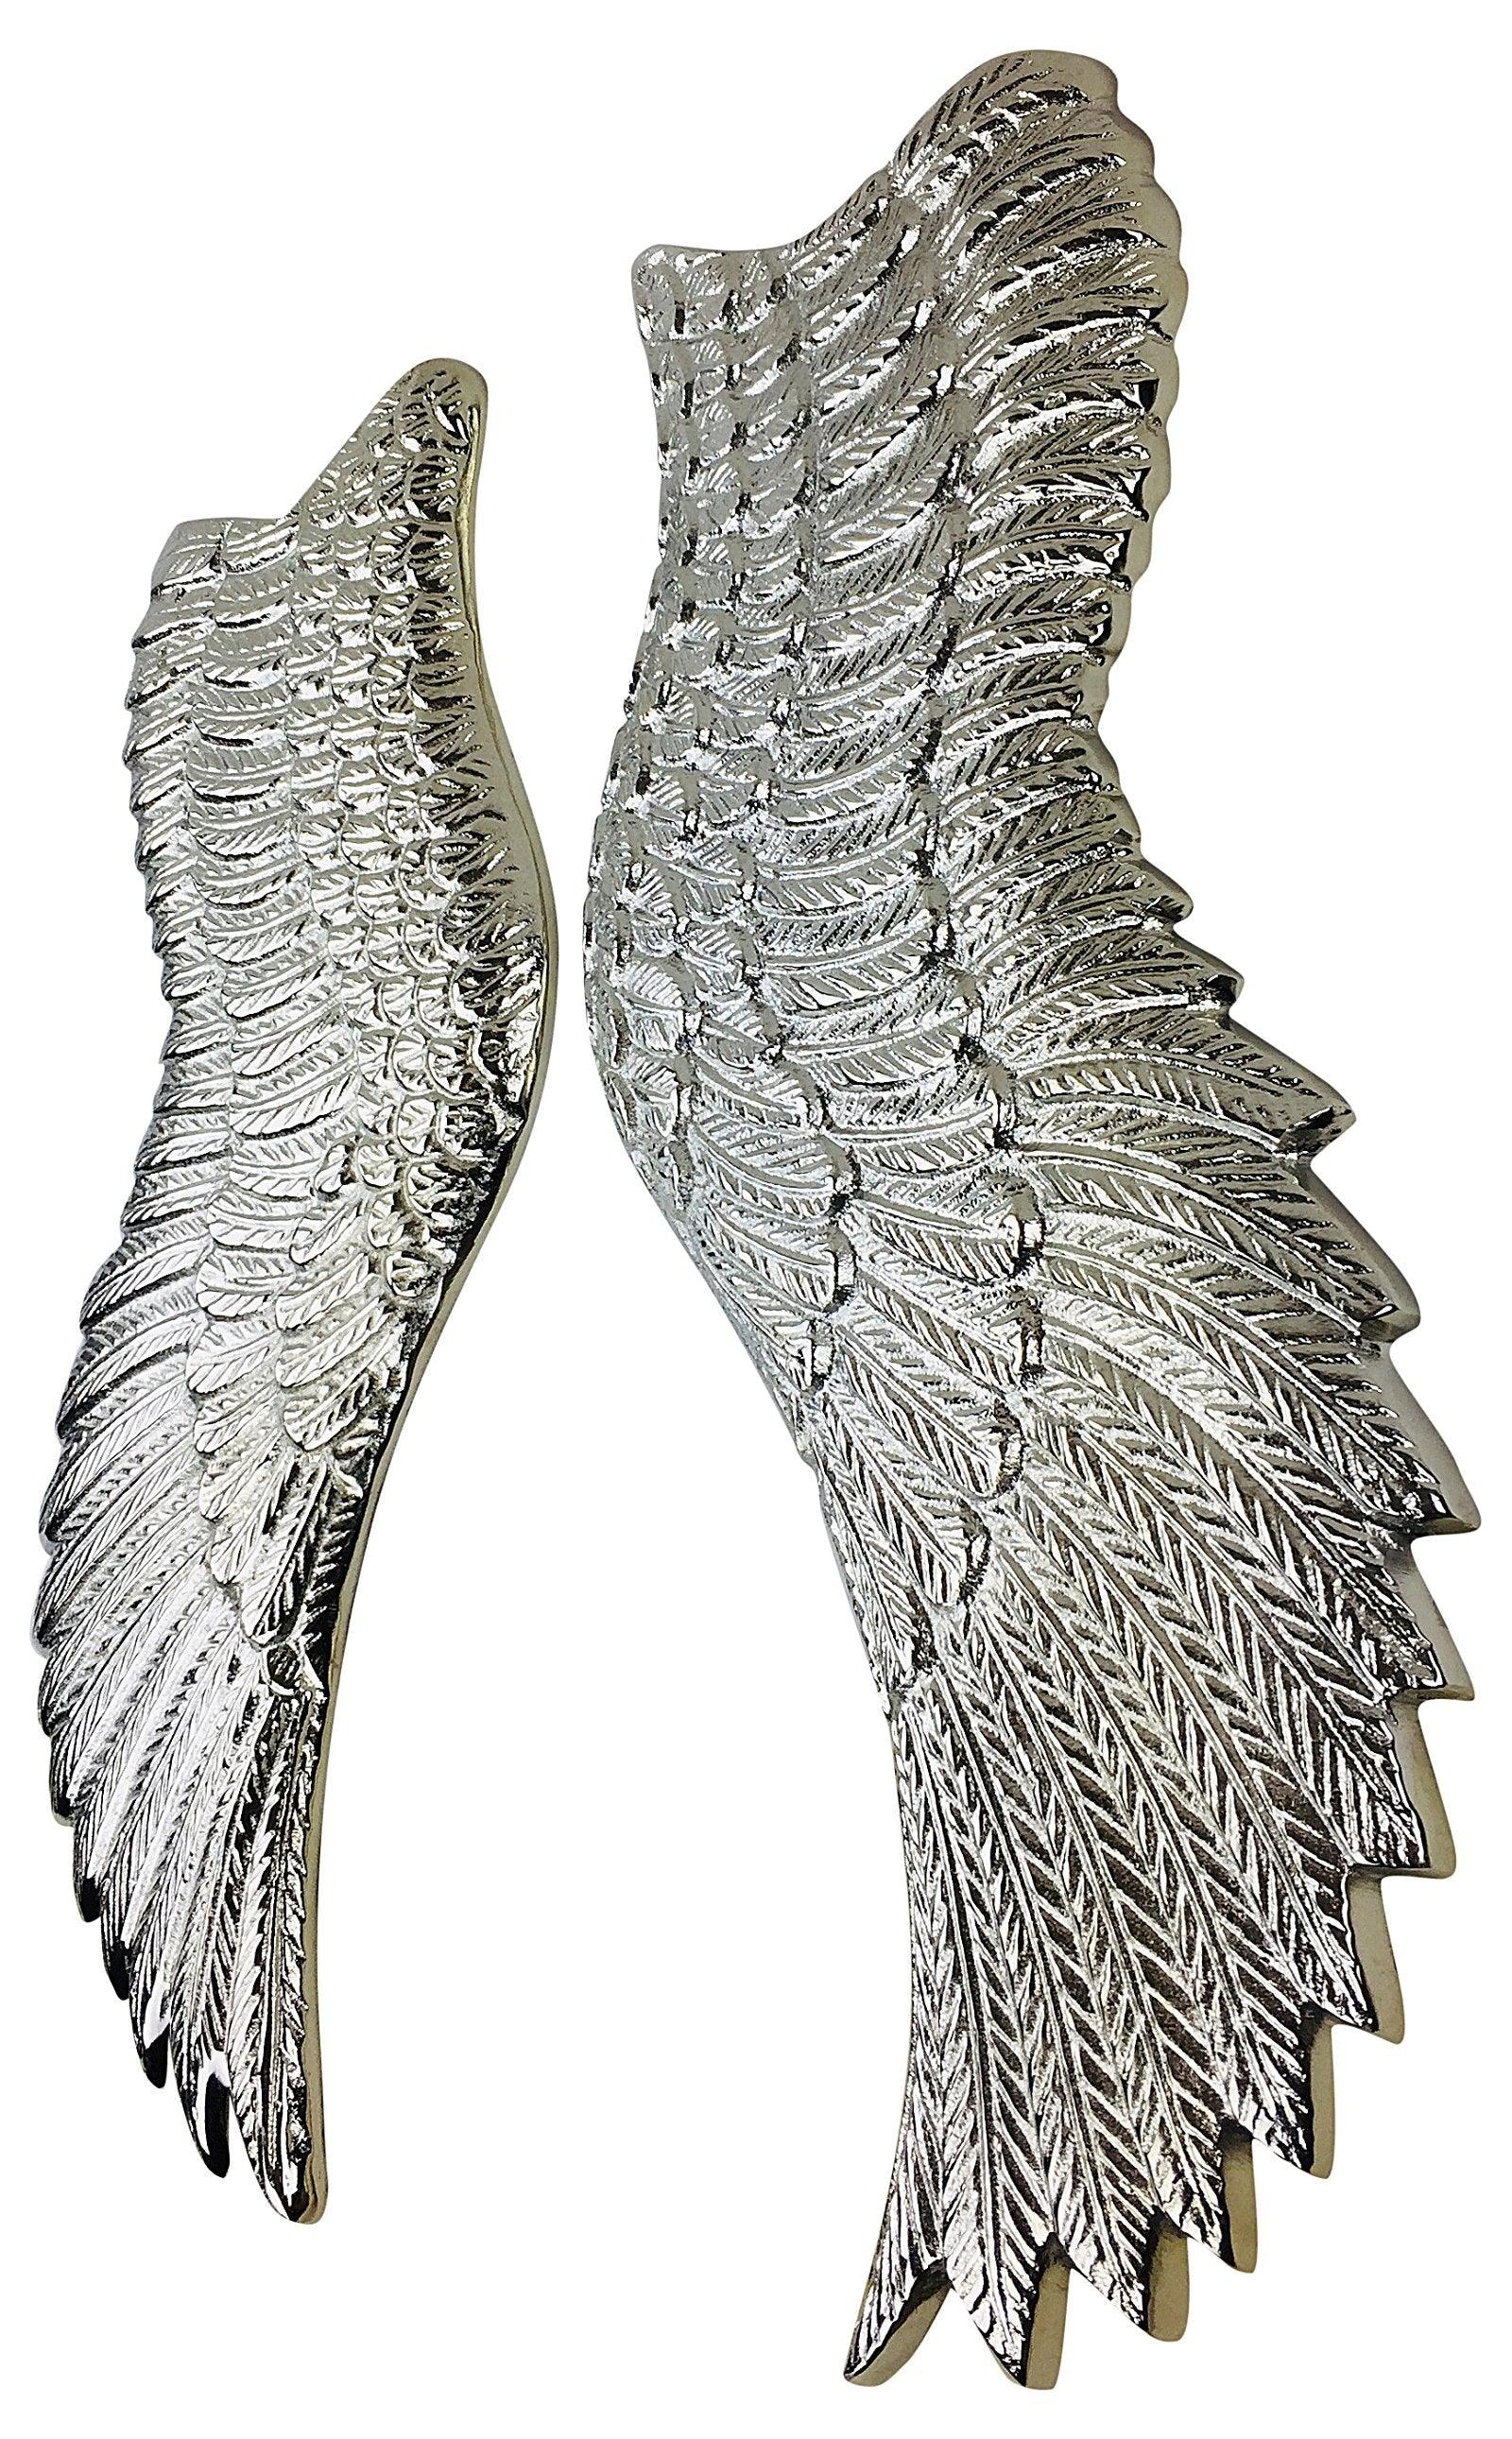 View Pair Of Angel Wings 50cm information